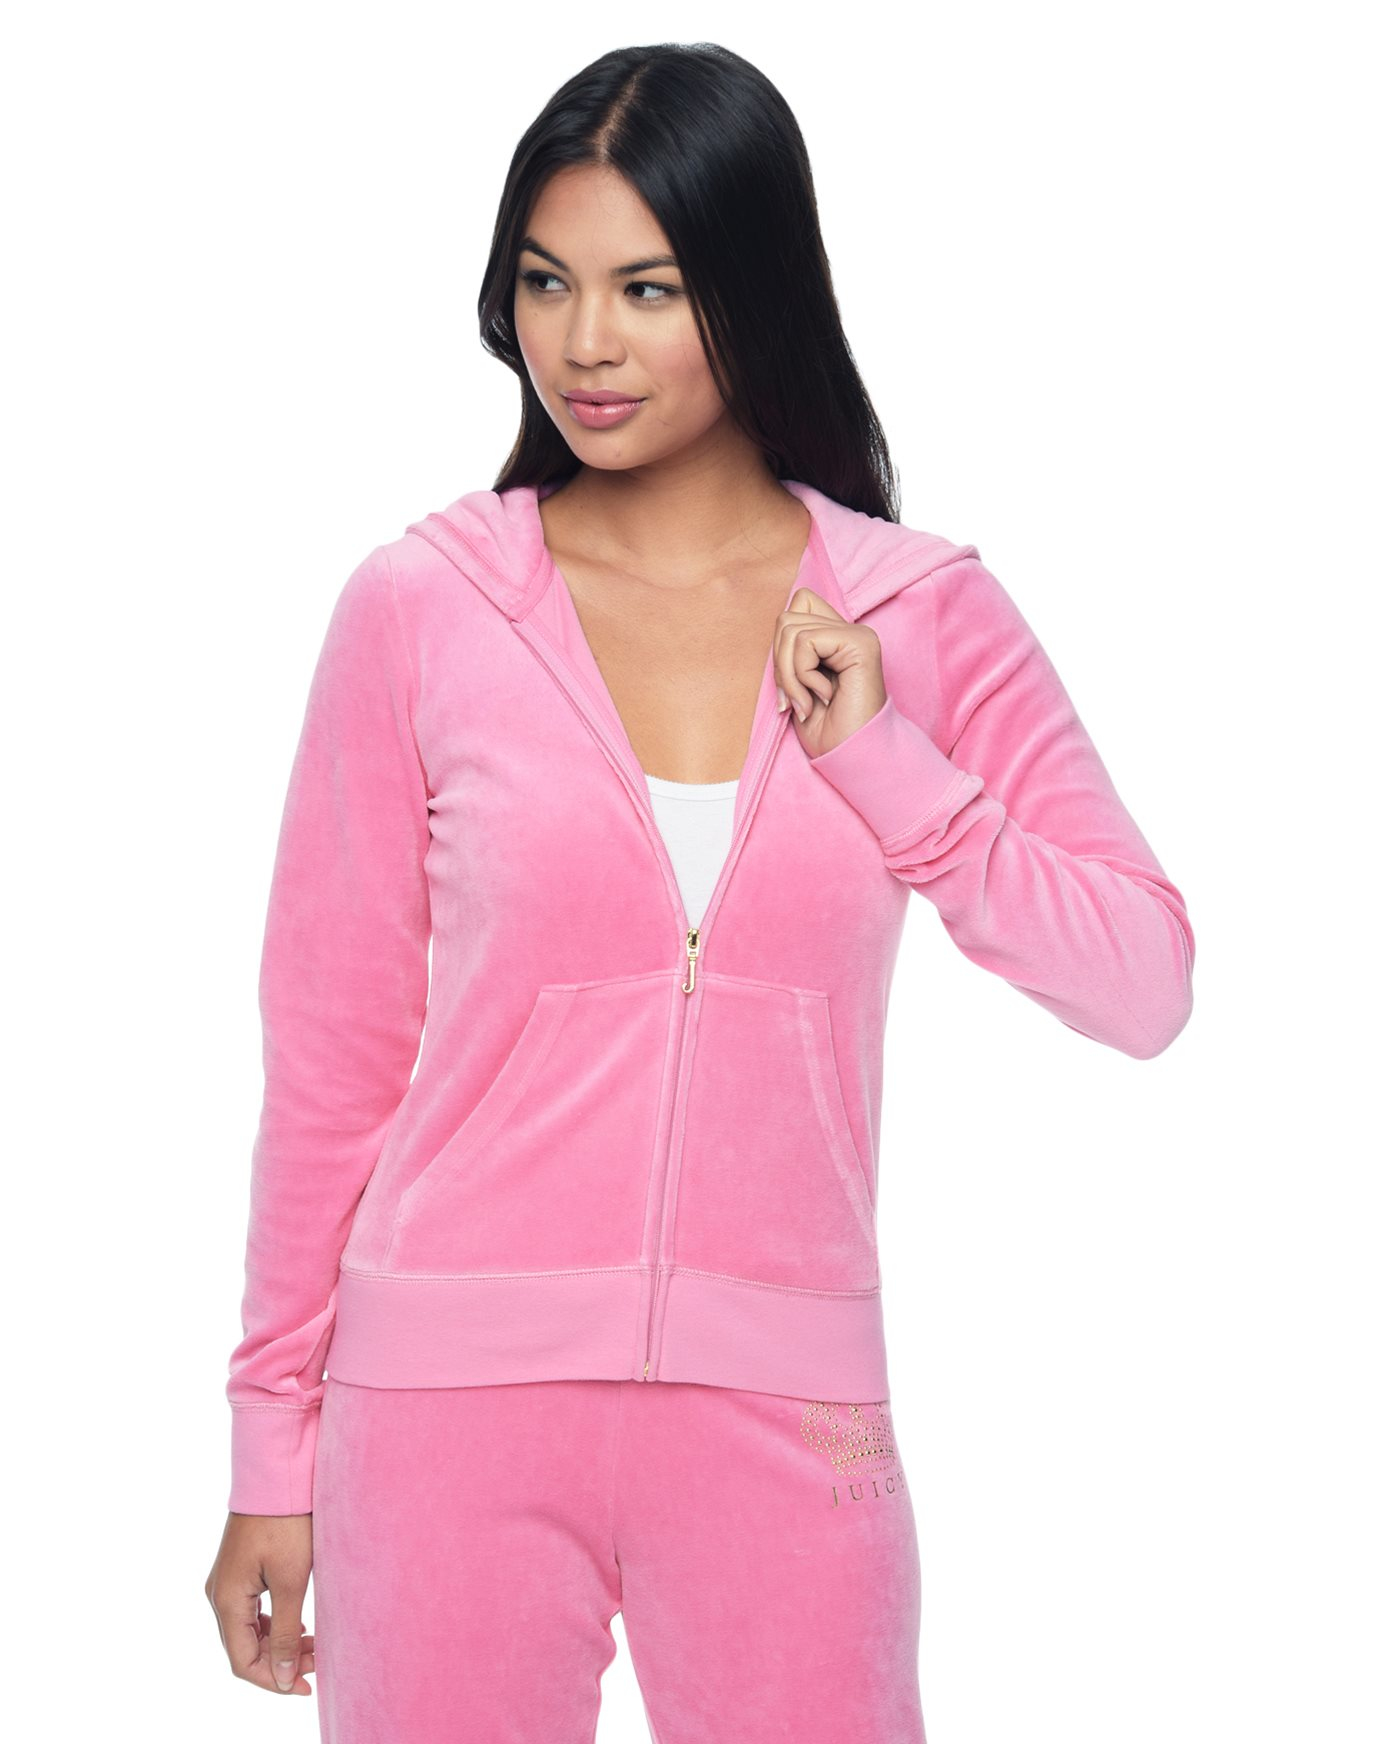 Juicy couture Logo Jc Monogram Velour Original Jacket in Pink (Cameo ...